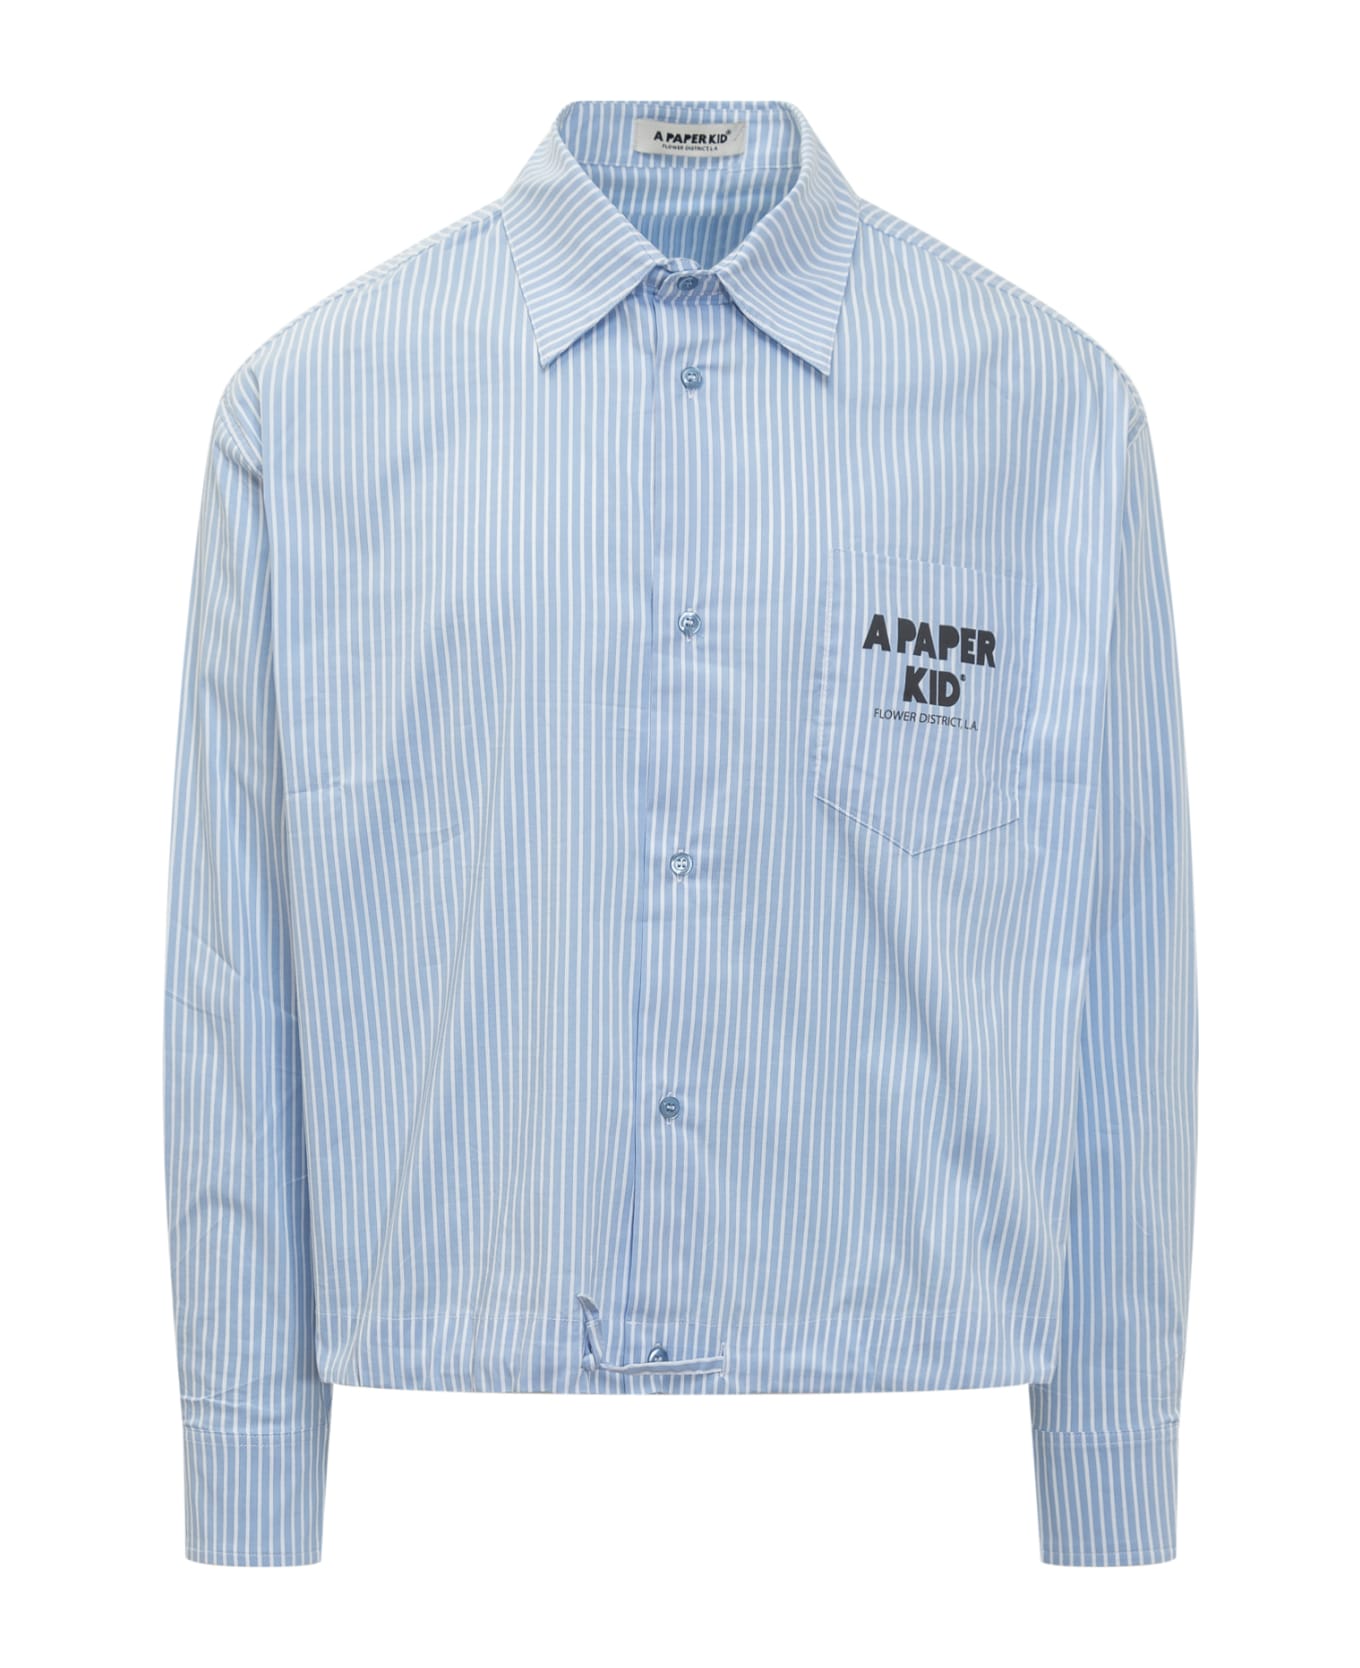 A Paper Kid Shirt - CELESTE/LIGHT BLUE シャツ